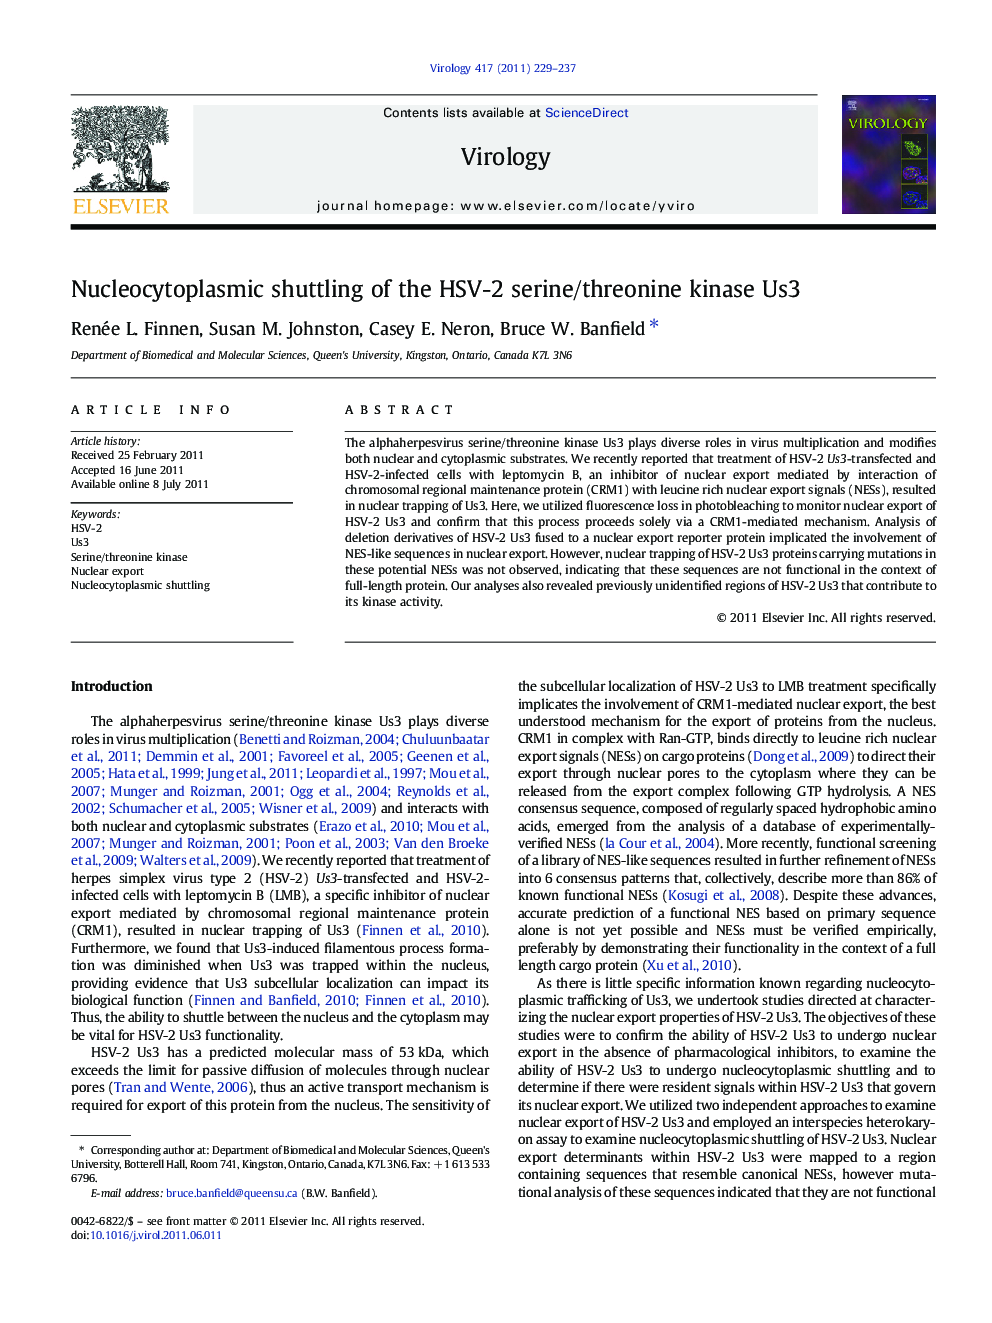 Nucleocytoplasmic shuttling of the HSV-2 serine/threonine kinase Us3